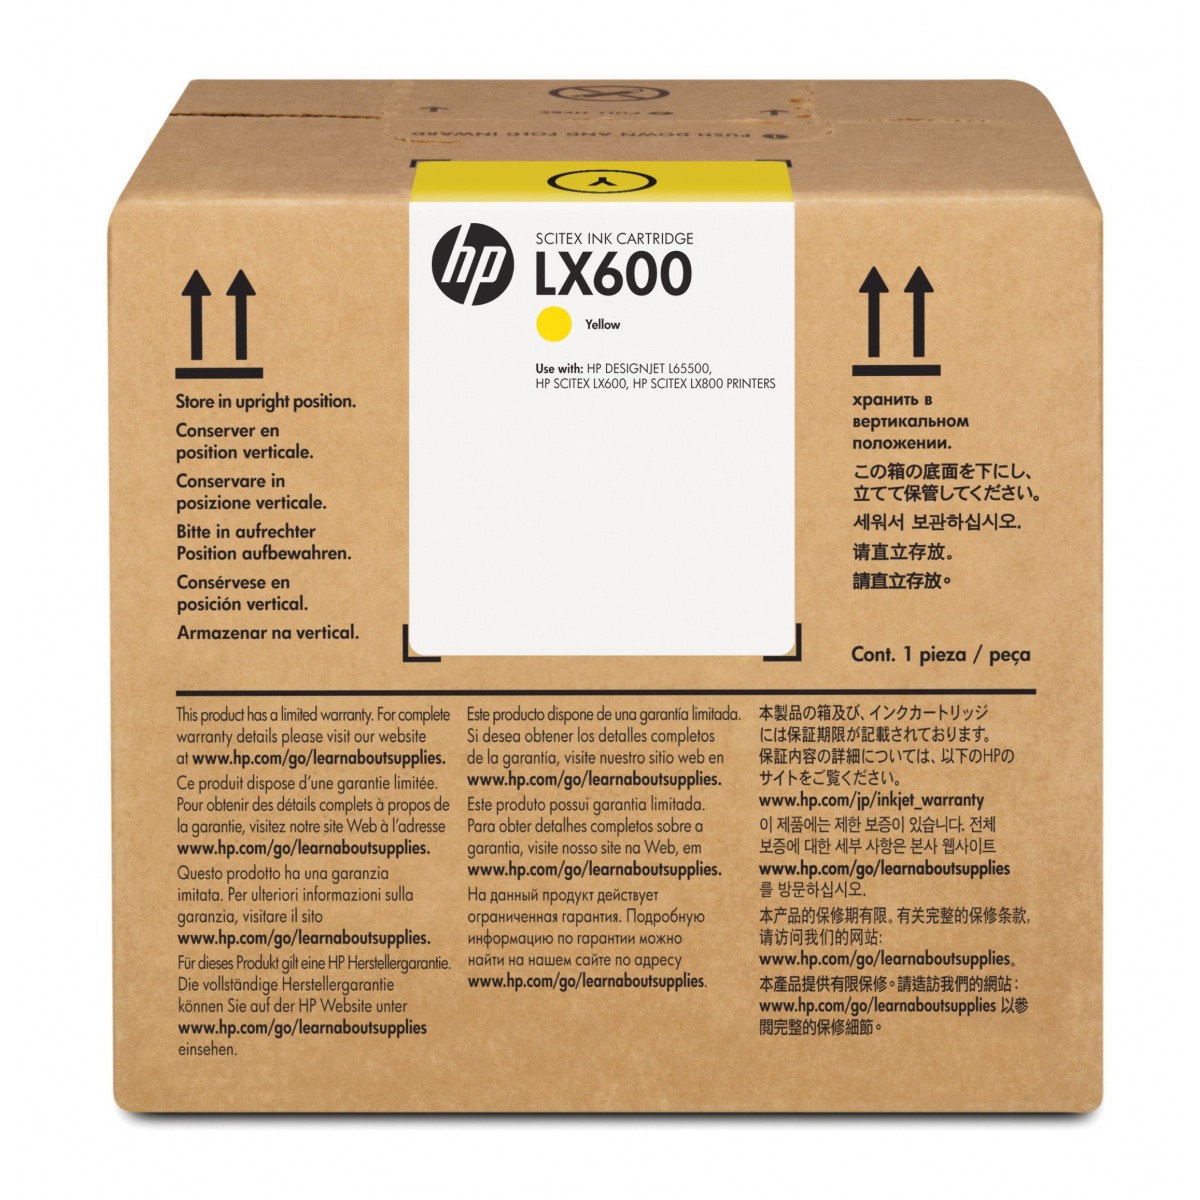 HP LX600 - Original - Pigment-based ink - Yellow - HP - HP Scitex LX600 Printer - HP Scitex LX800 Printer - HP Designjet L65500 